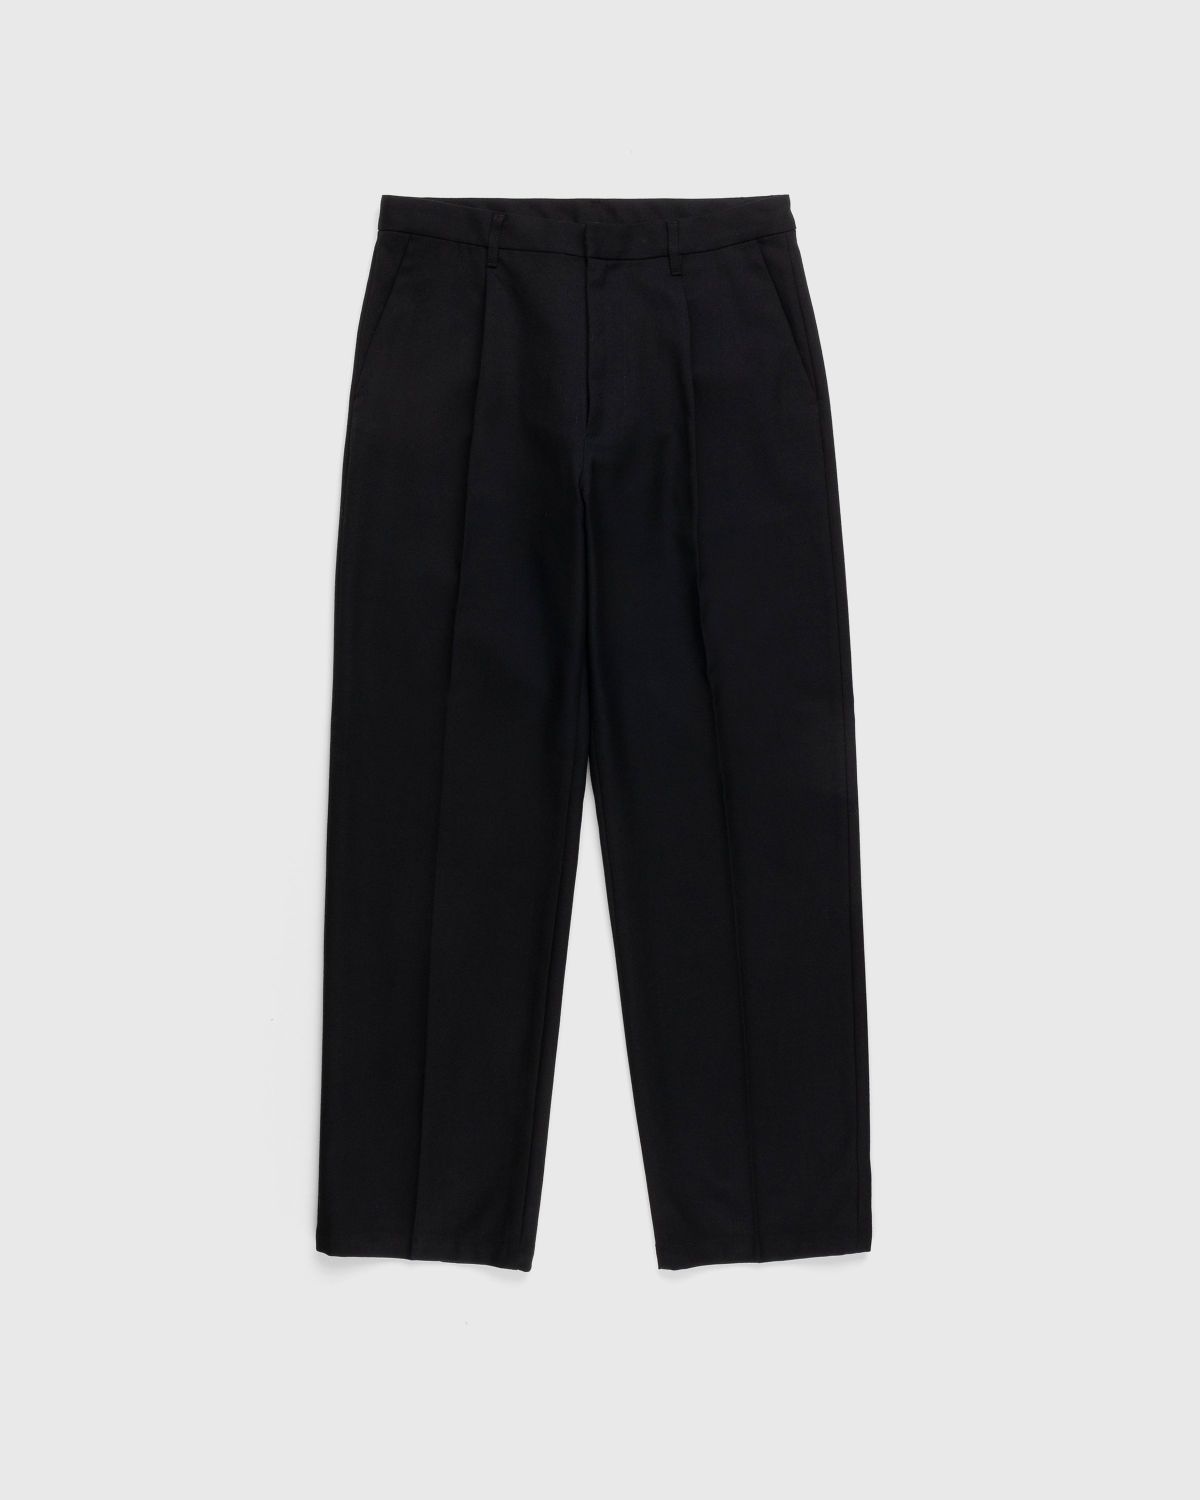 Highsnobiety – Heavy Wool Dress Pants Black - Trousers - Black - Image 1